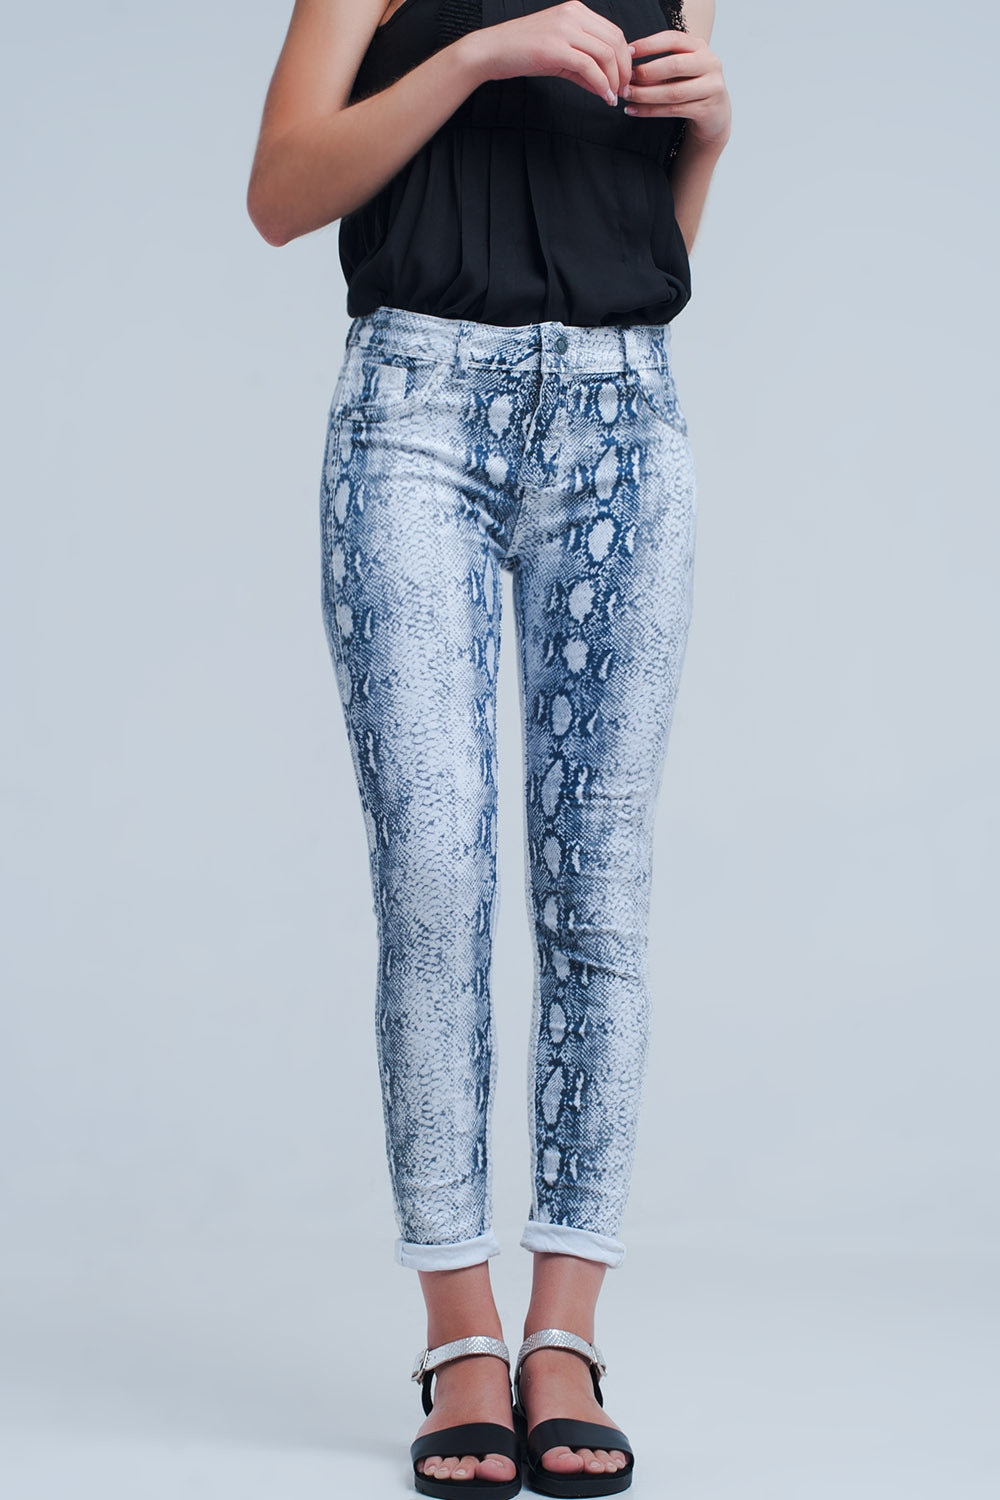 Q2 White reversible jeans